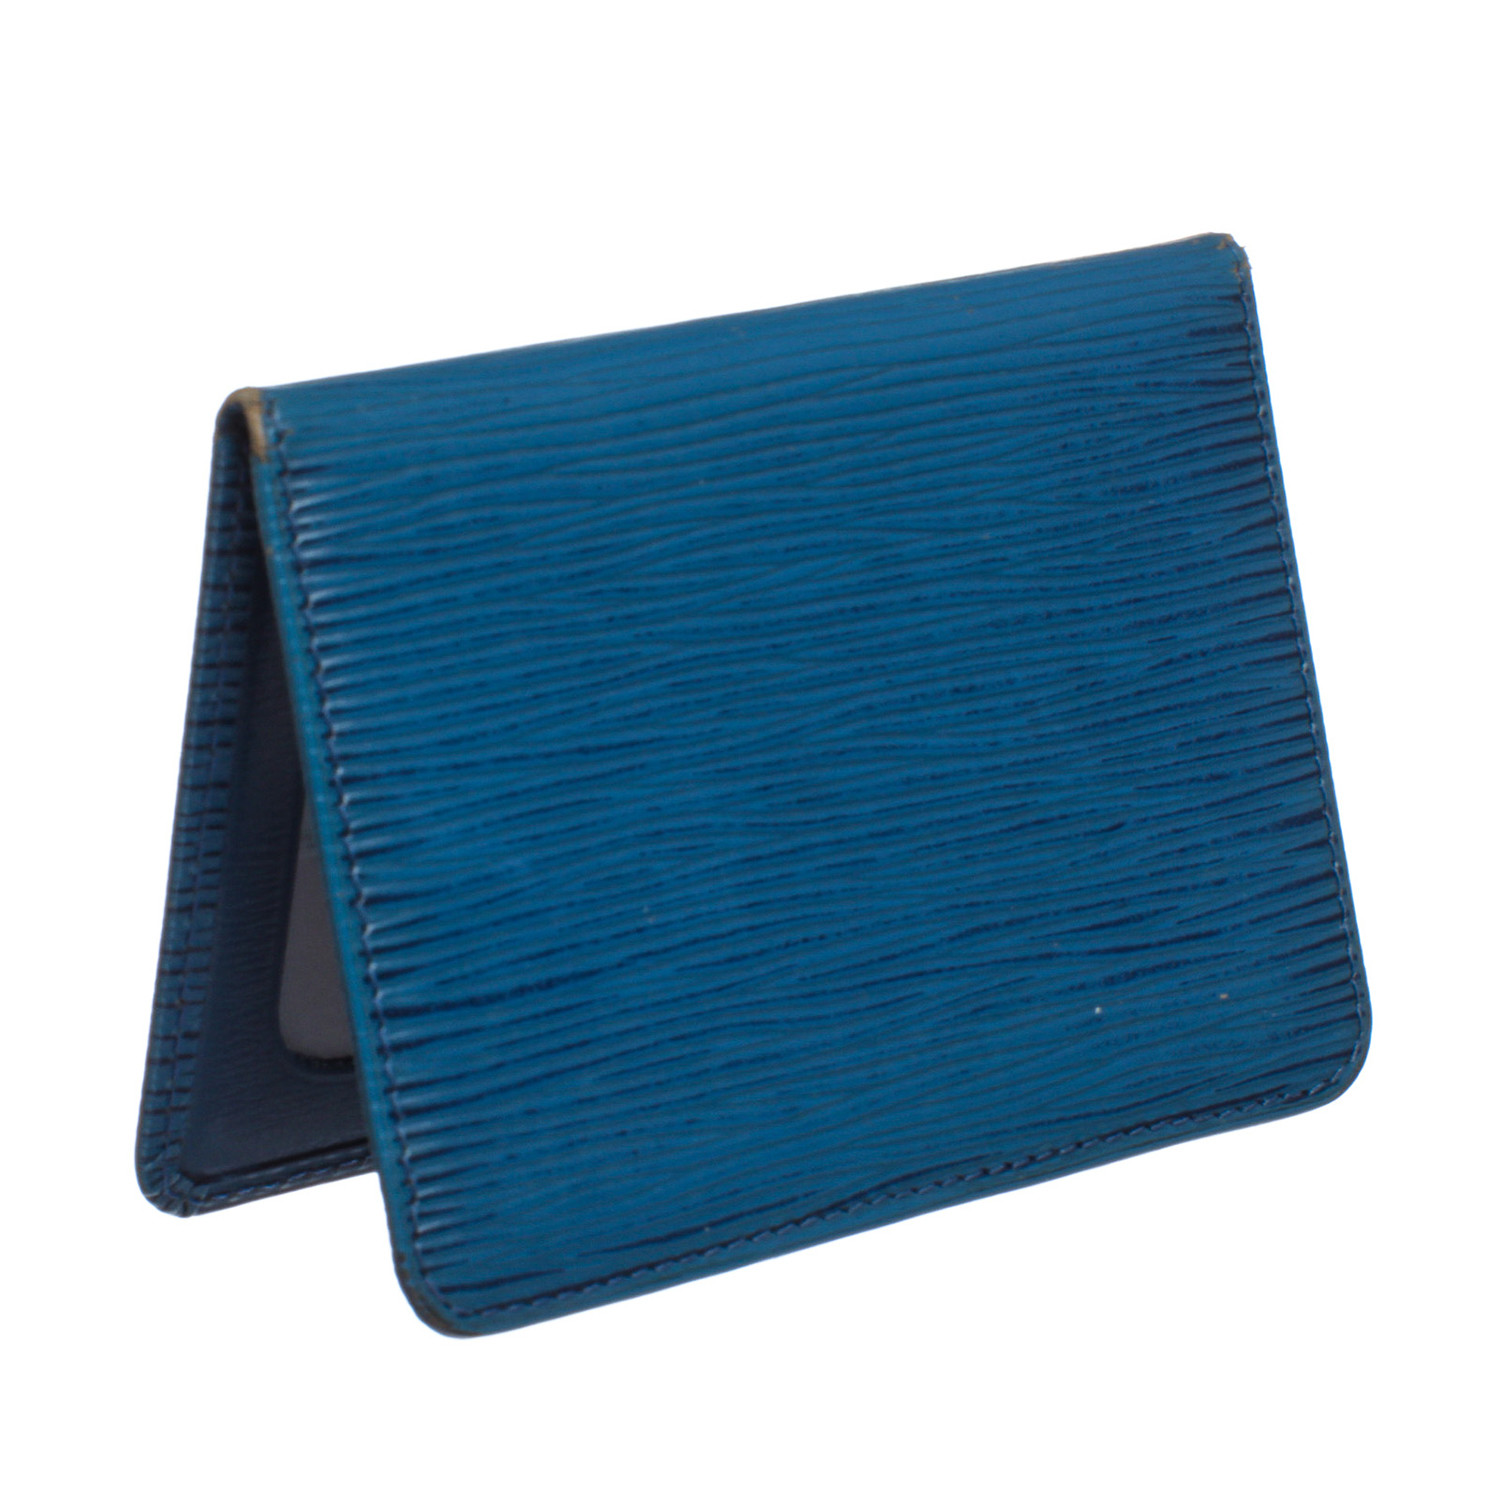 Louis Vuitton Blue Epi Leather Toledo Multicles 6 Key Holder